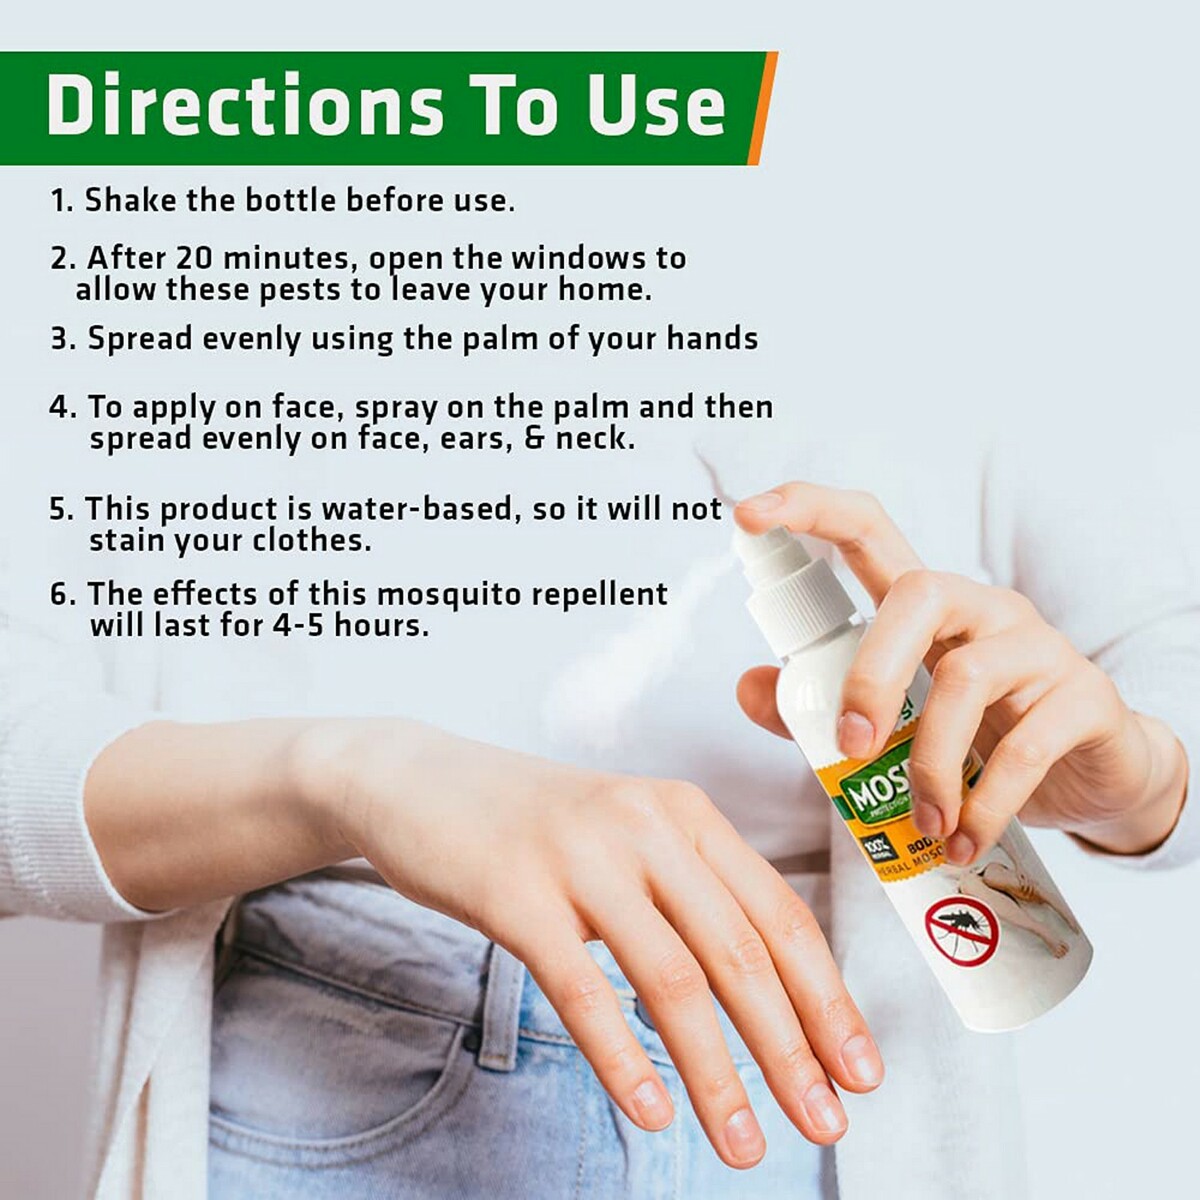 Herbal Strategi Mosquitoes Repellent Body Spray 100ml